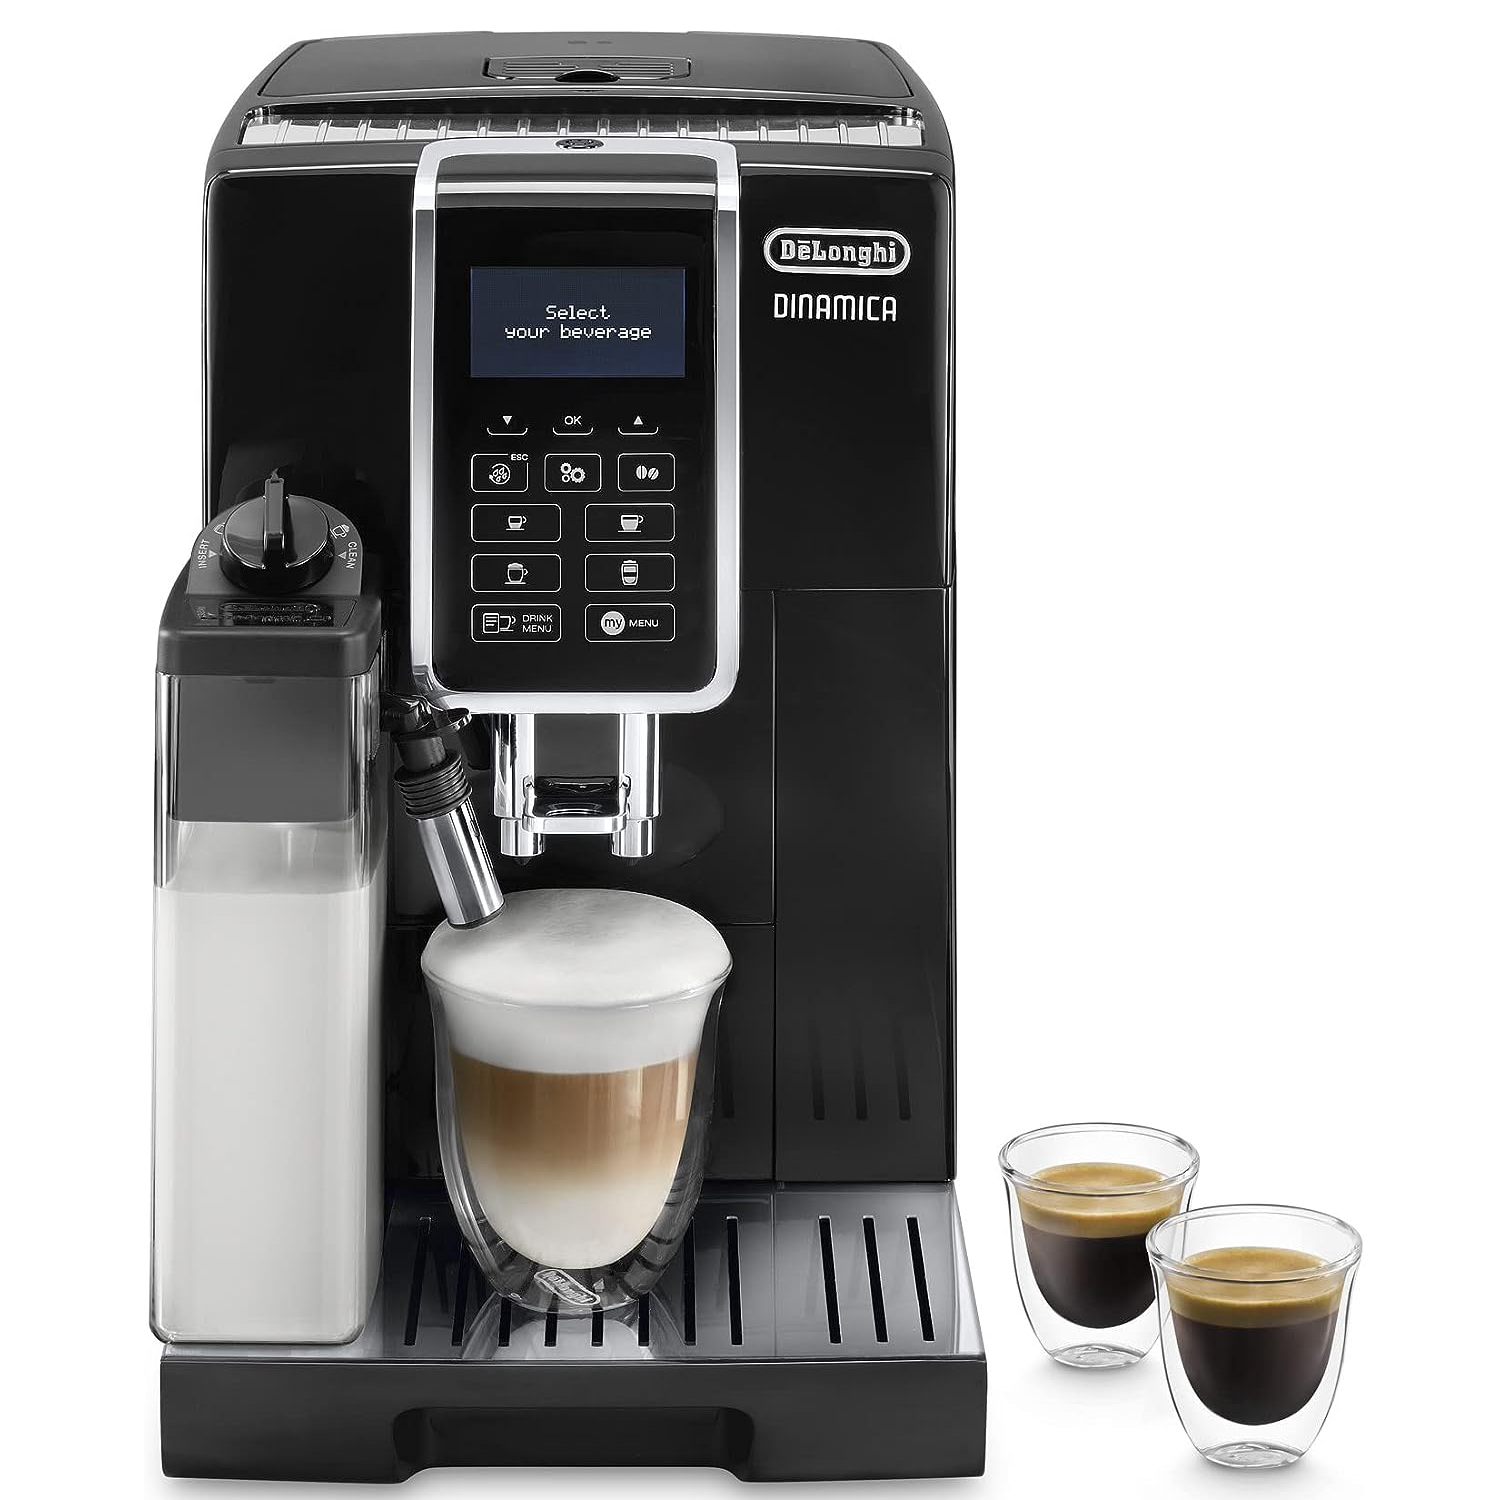 DELONGHI Dinamica ECAM 350.55.B Bean to Cup Coffee Machine – Black